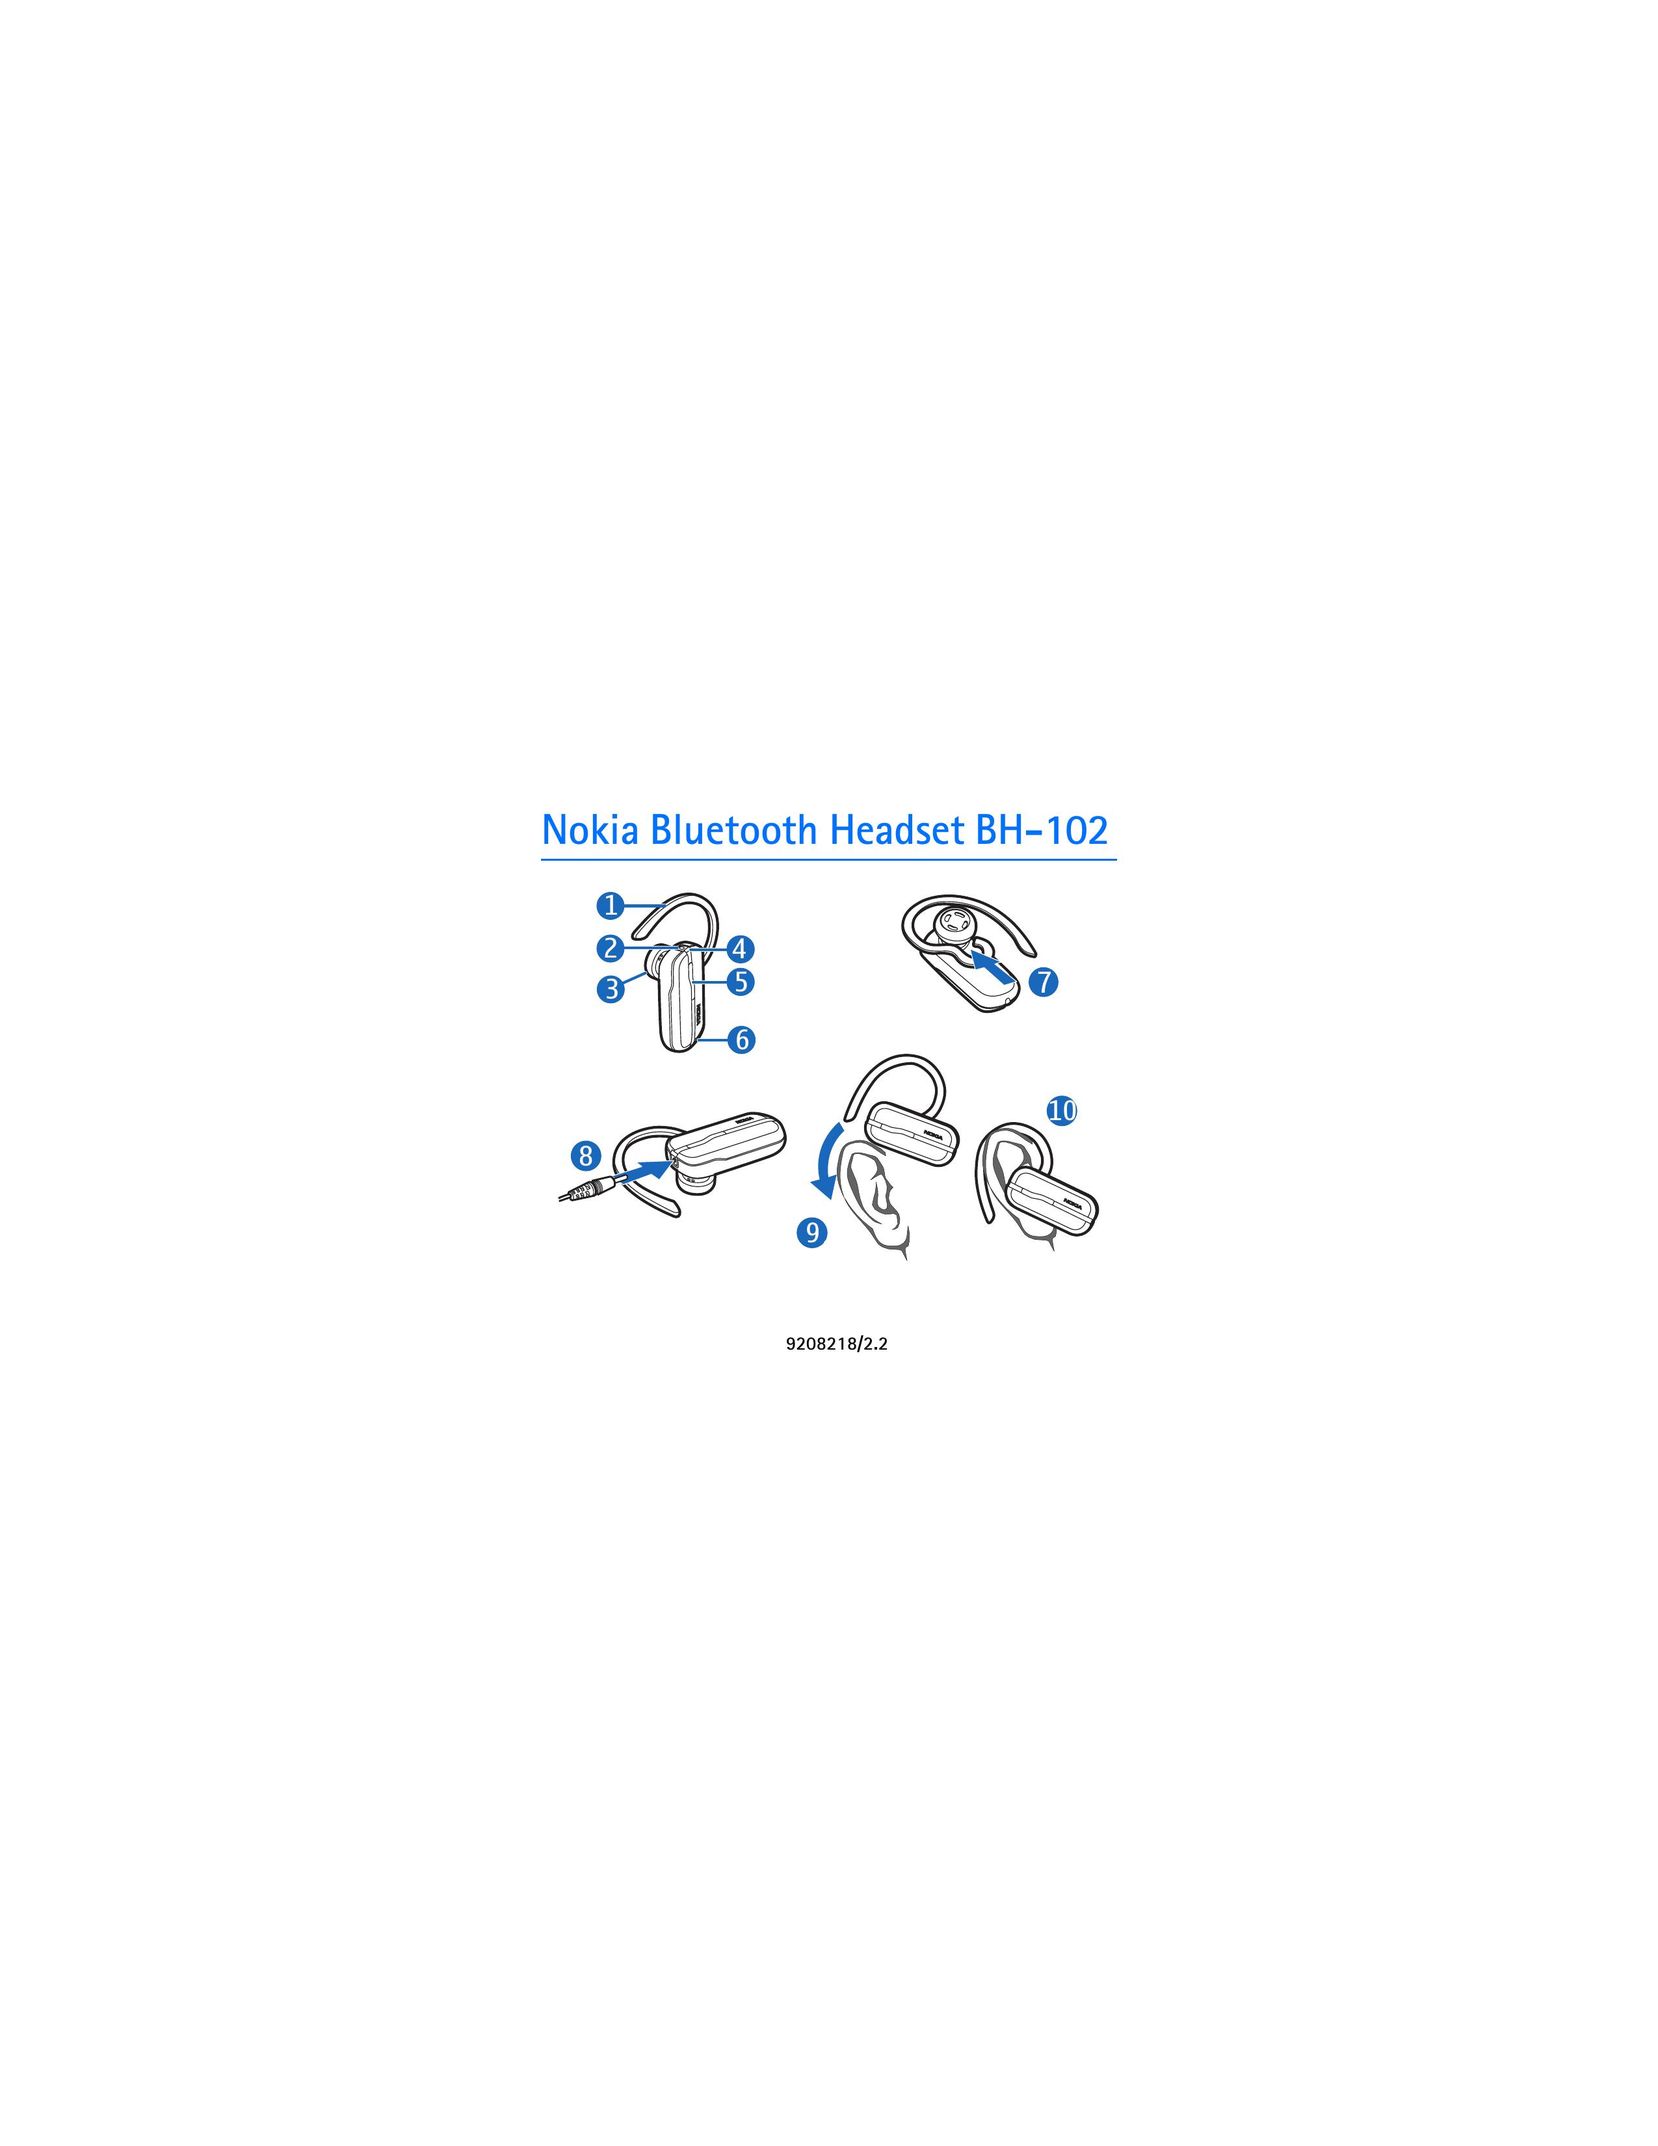 Nokia BH-102 Bluetooth Headset User Manual